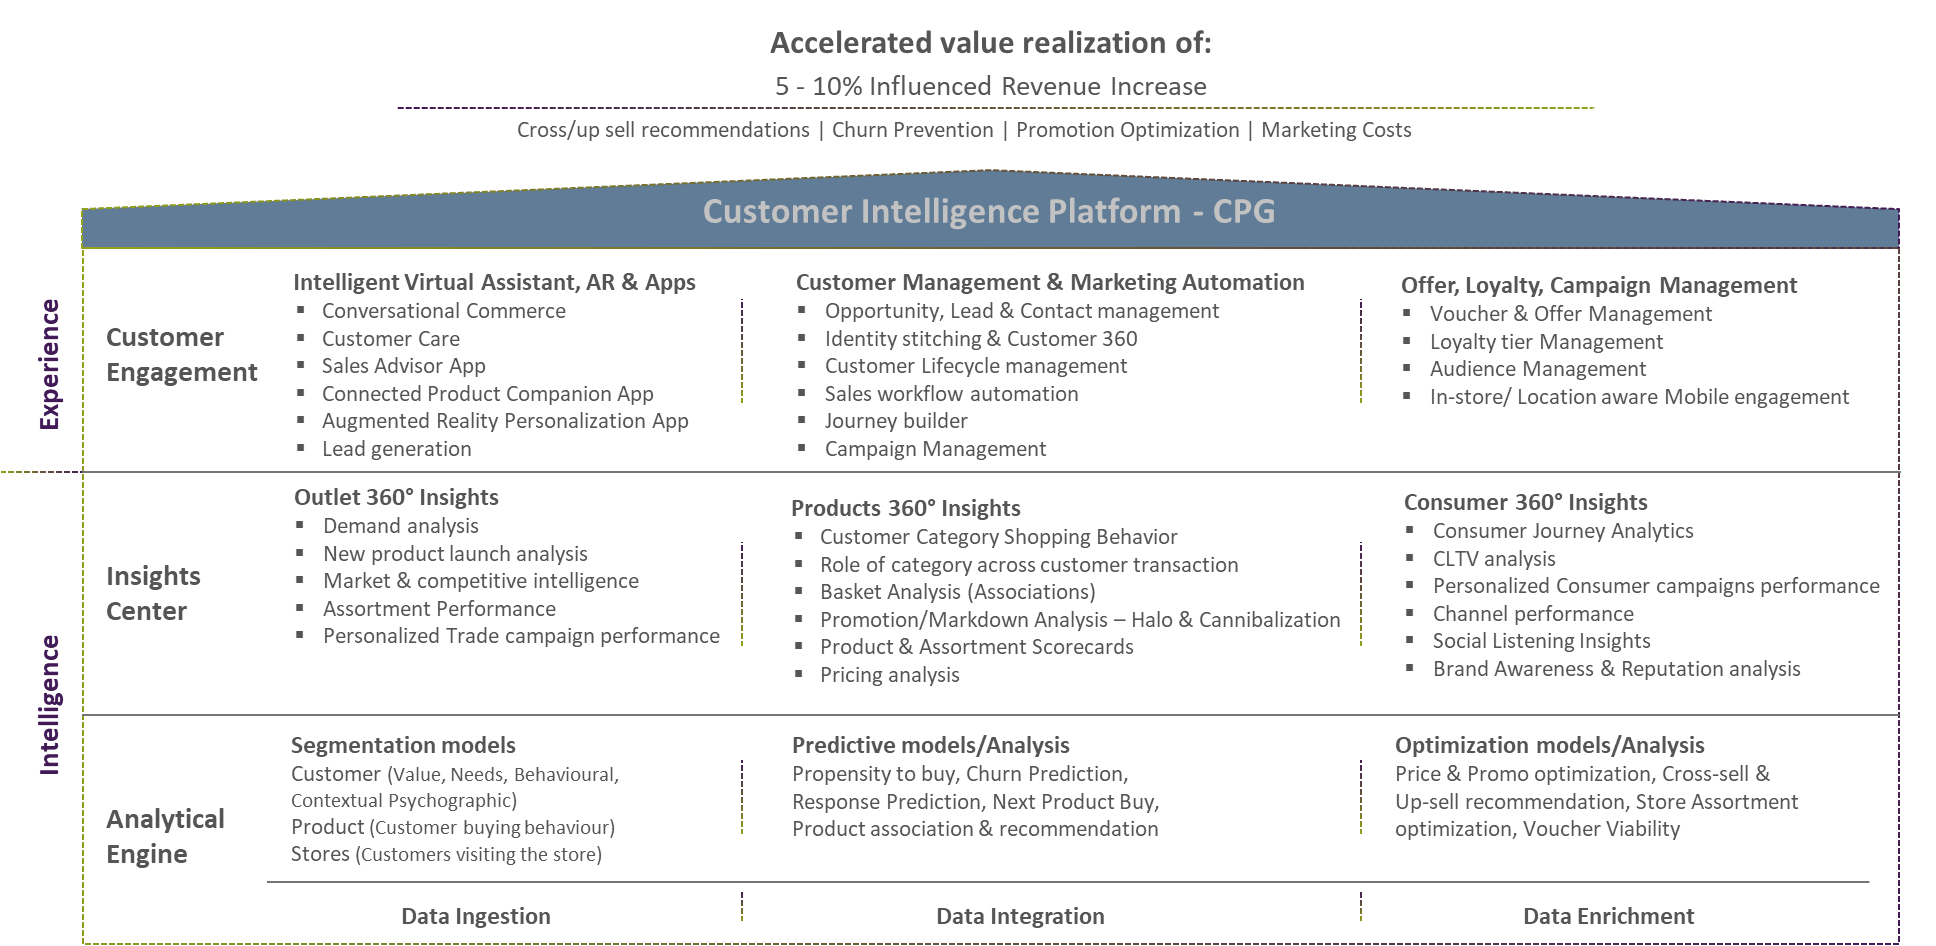 Customer Intelligence Platform – CPG